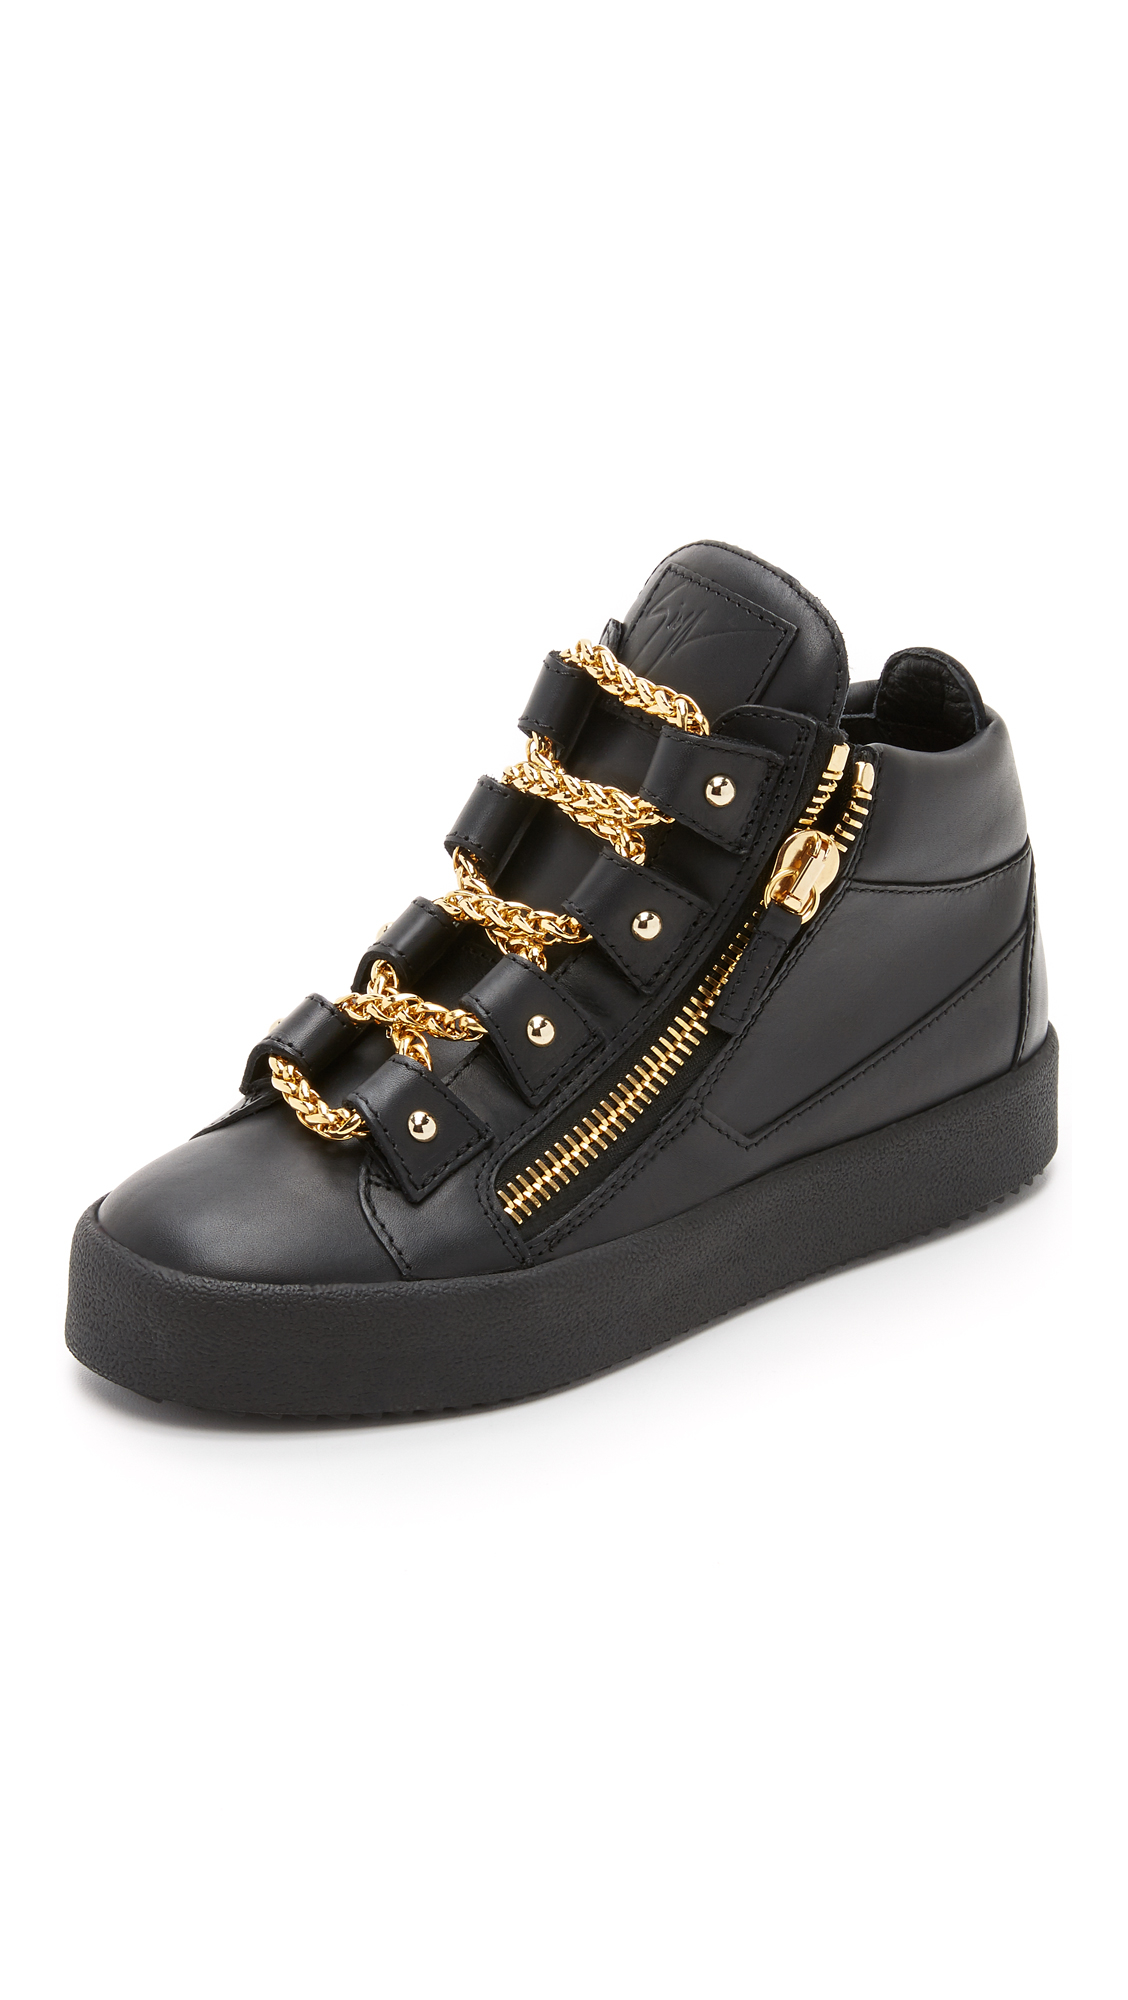 Lyst - Giuseppe Zanotti Leather Chain Sneakers in Black